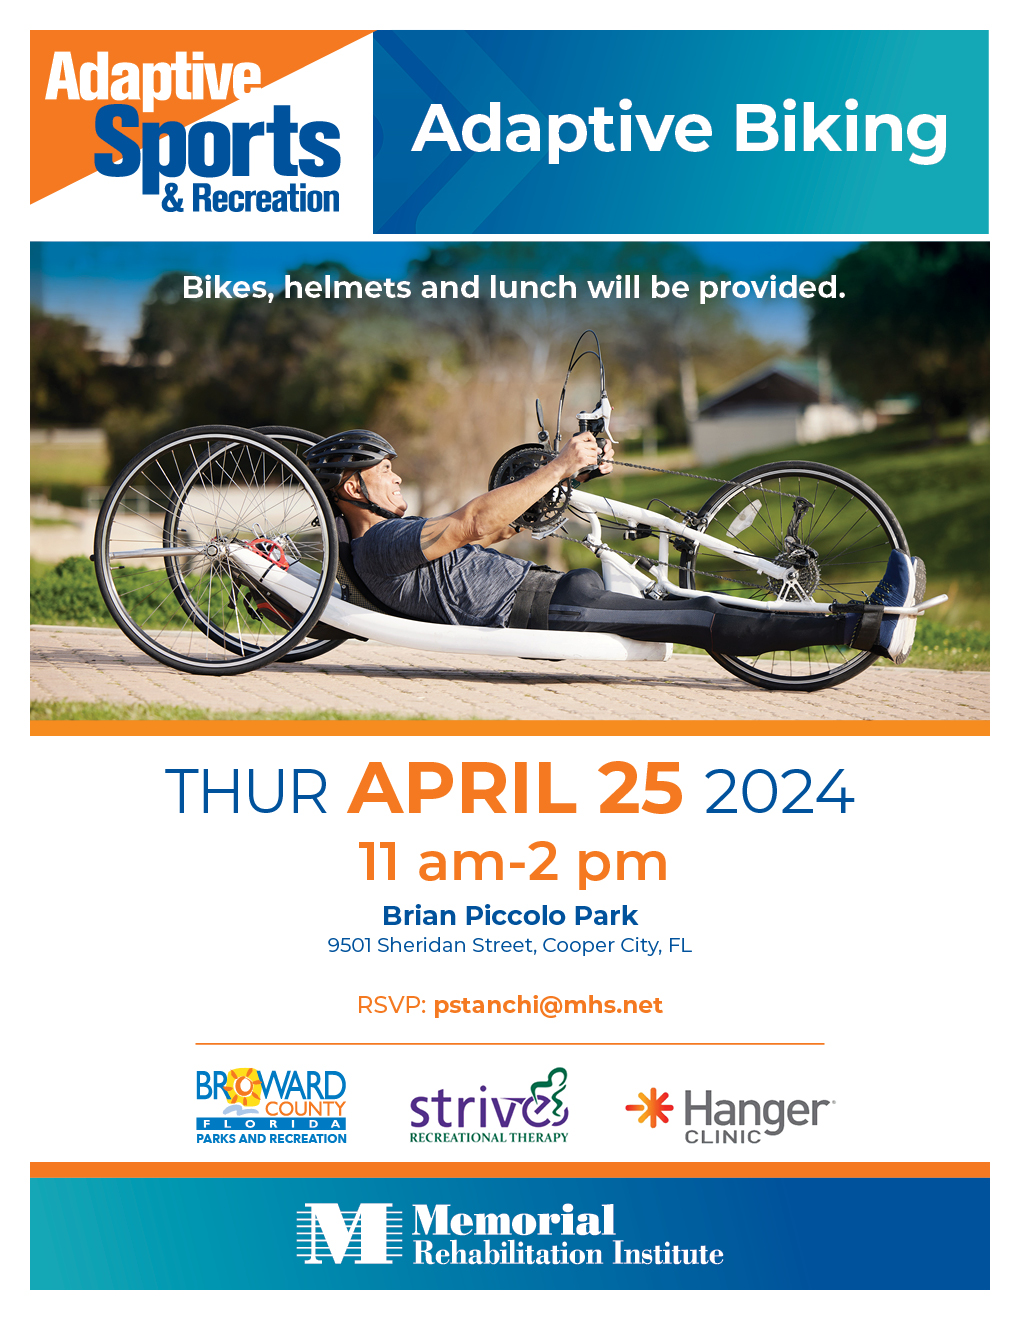 Adaptive Biking event at Piccolo Park 2024 flyer